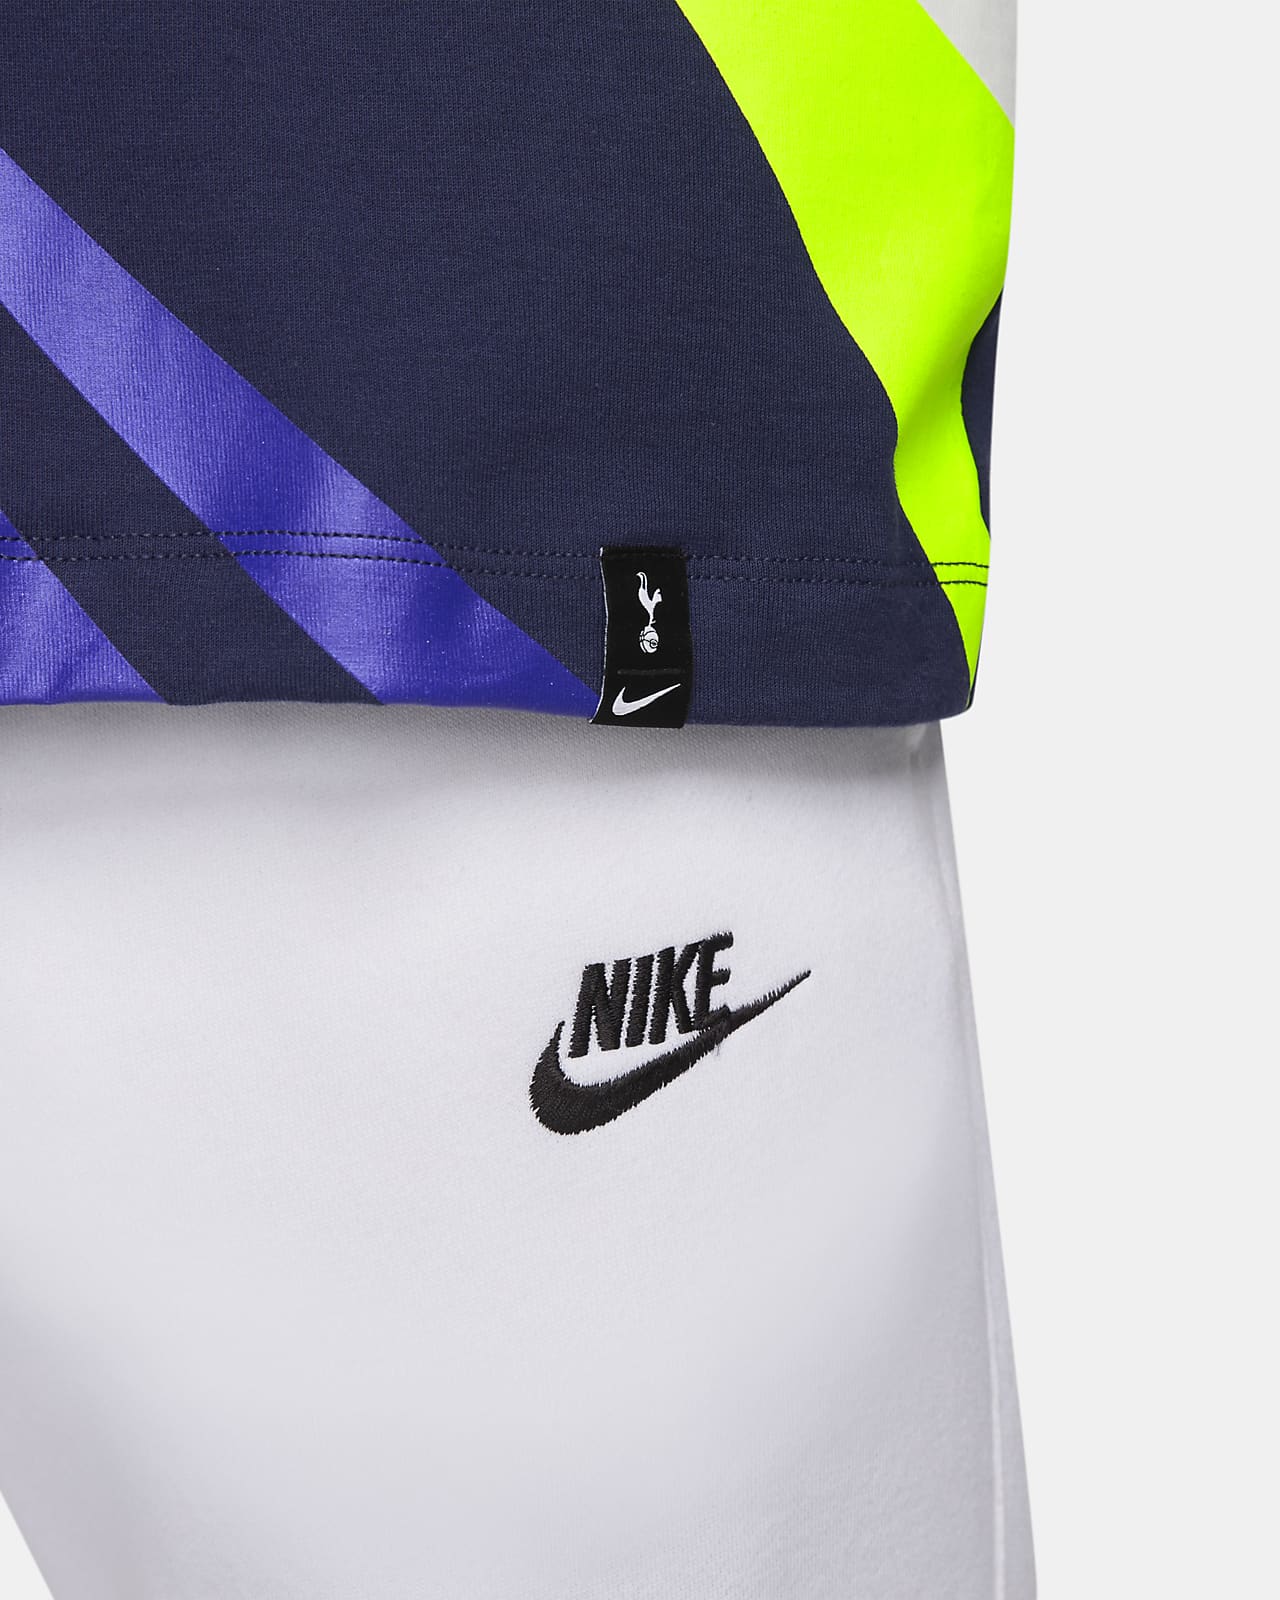 Tottenham Hotspur Travel Men's Nike Short-Sleeve Soccer Top Medium